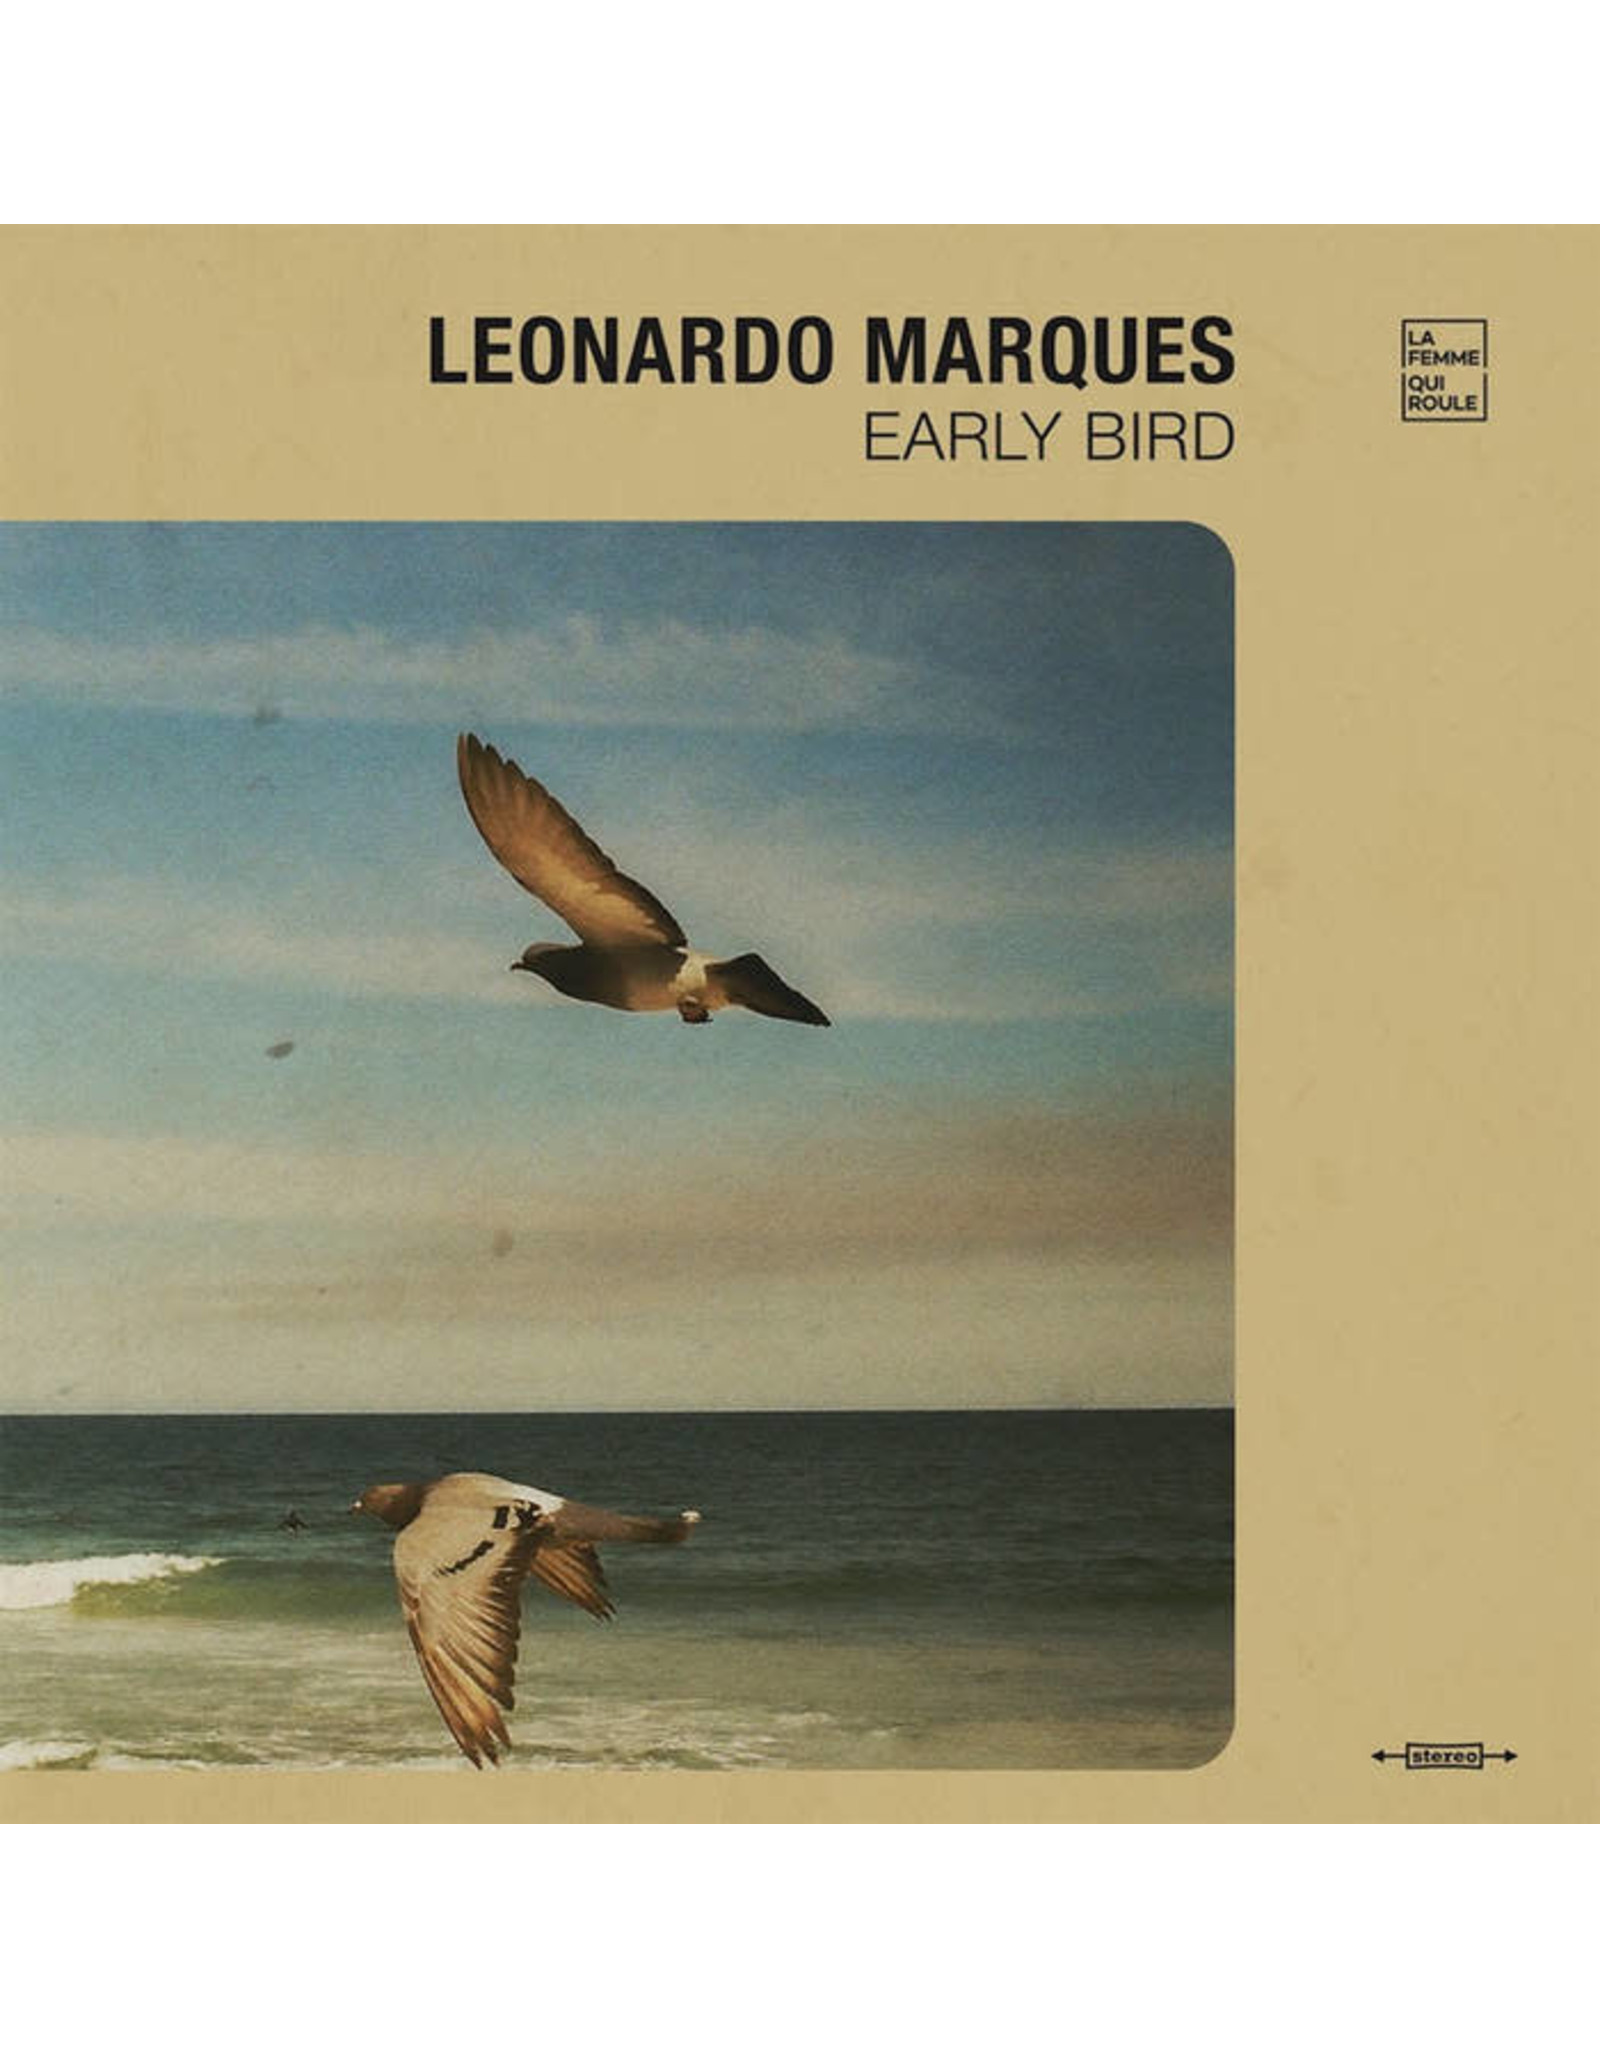 180g Marques, Leonardo: Early Bird LP